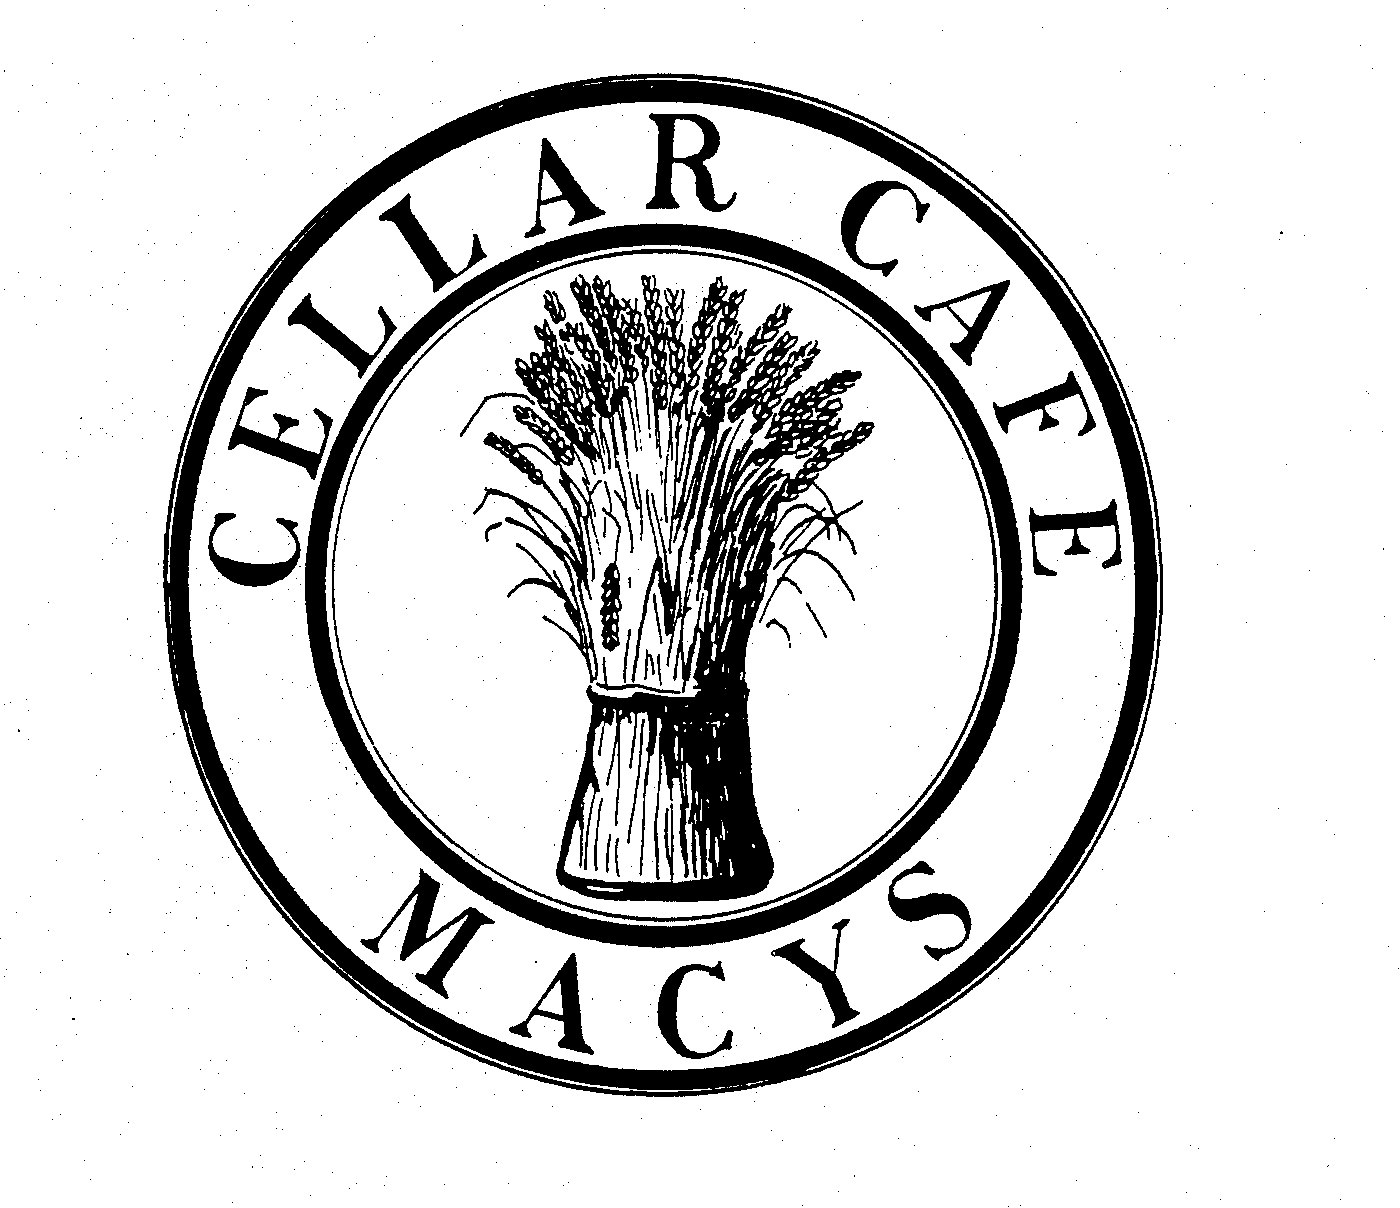  MACYS CELLAR CAFE